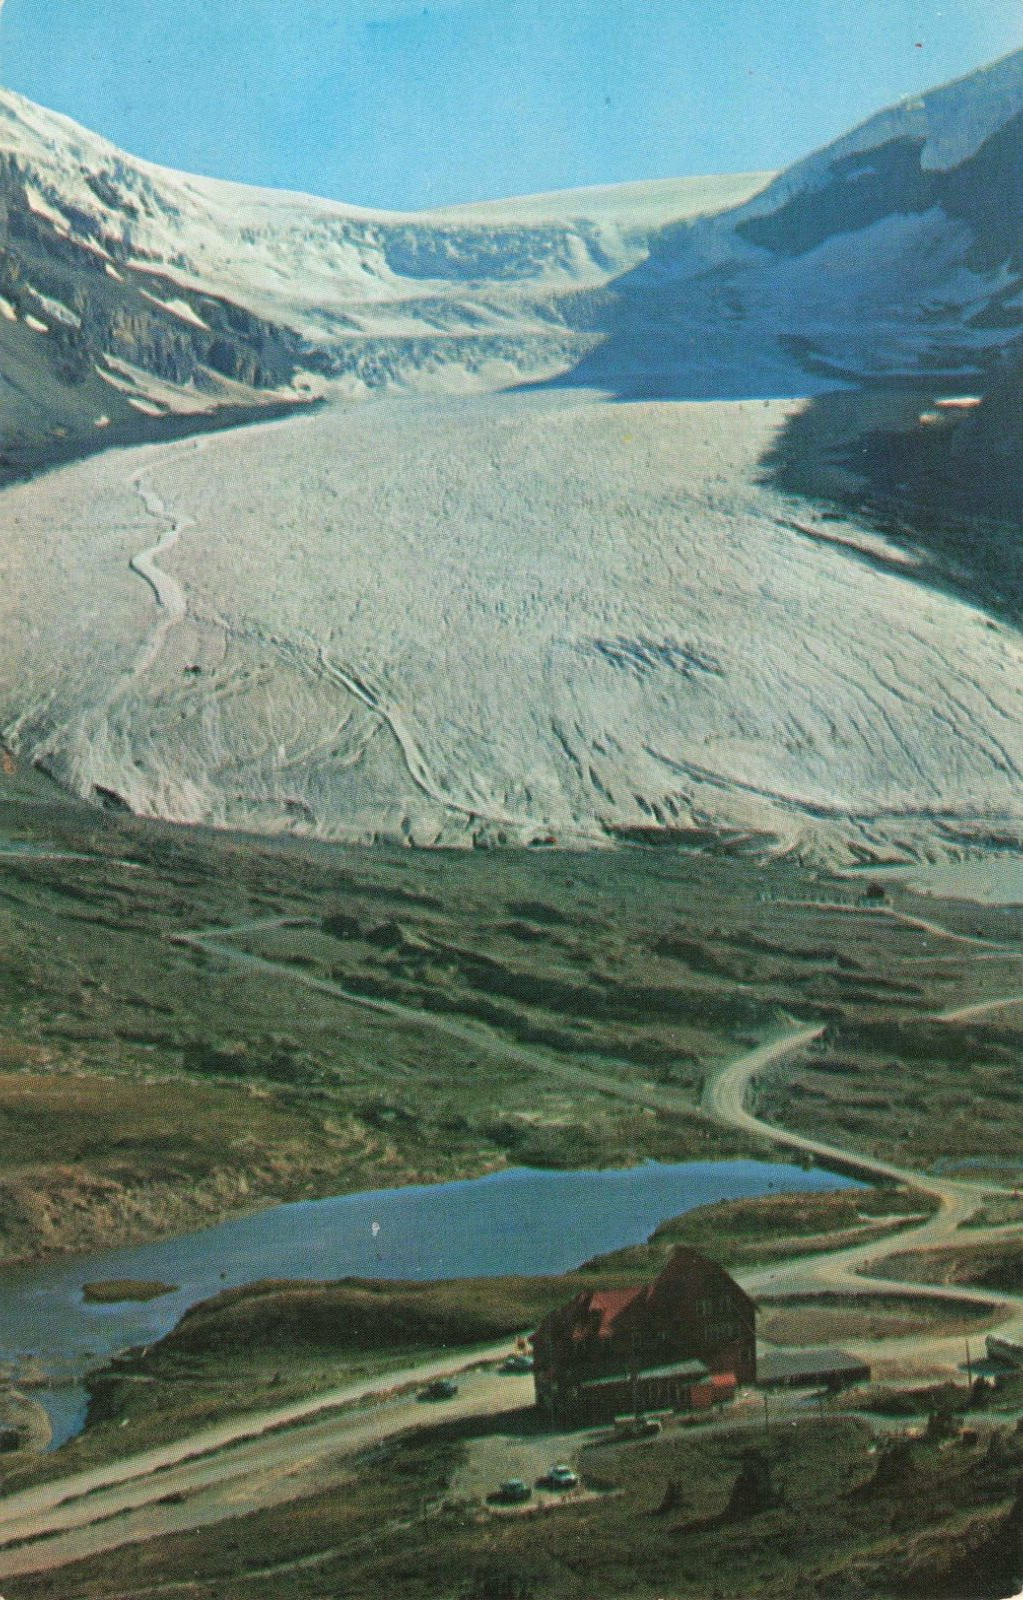 Jasper Alberta Canada, Athabasca Glacier Columbia Icefields, Vintage Postcard